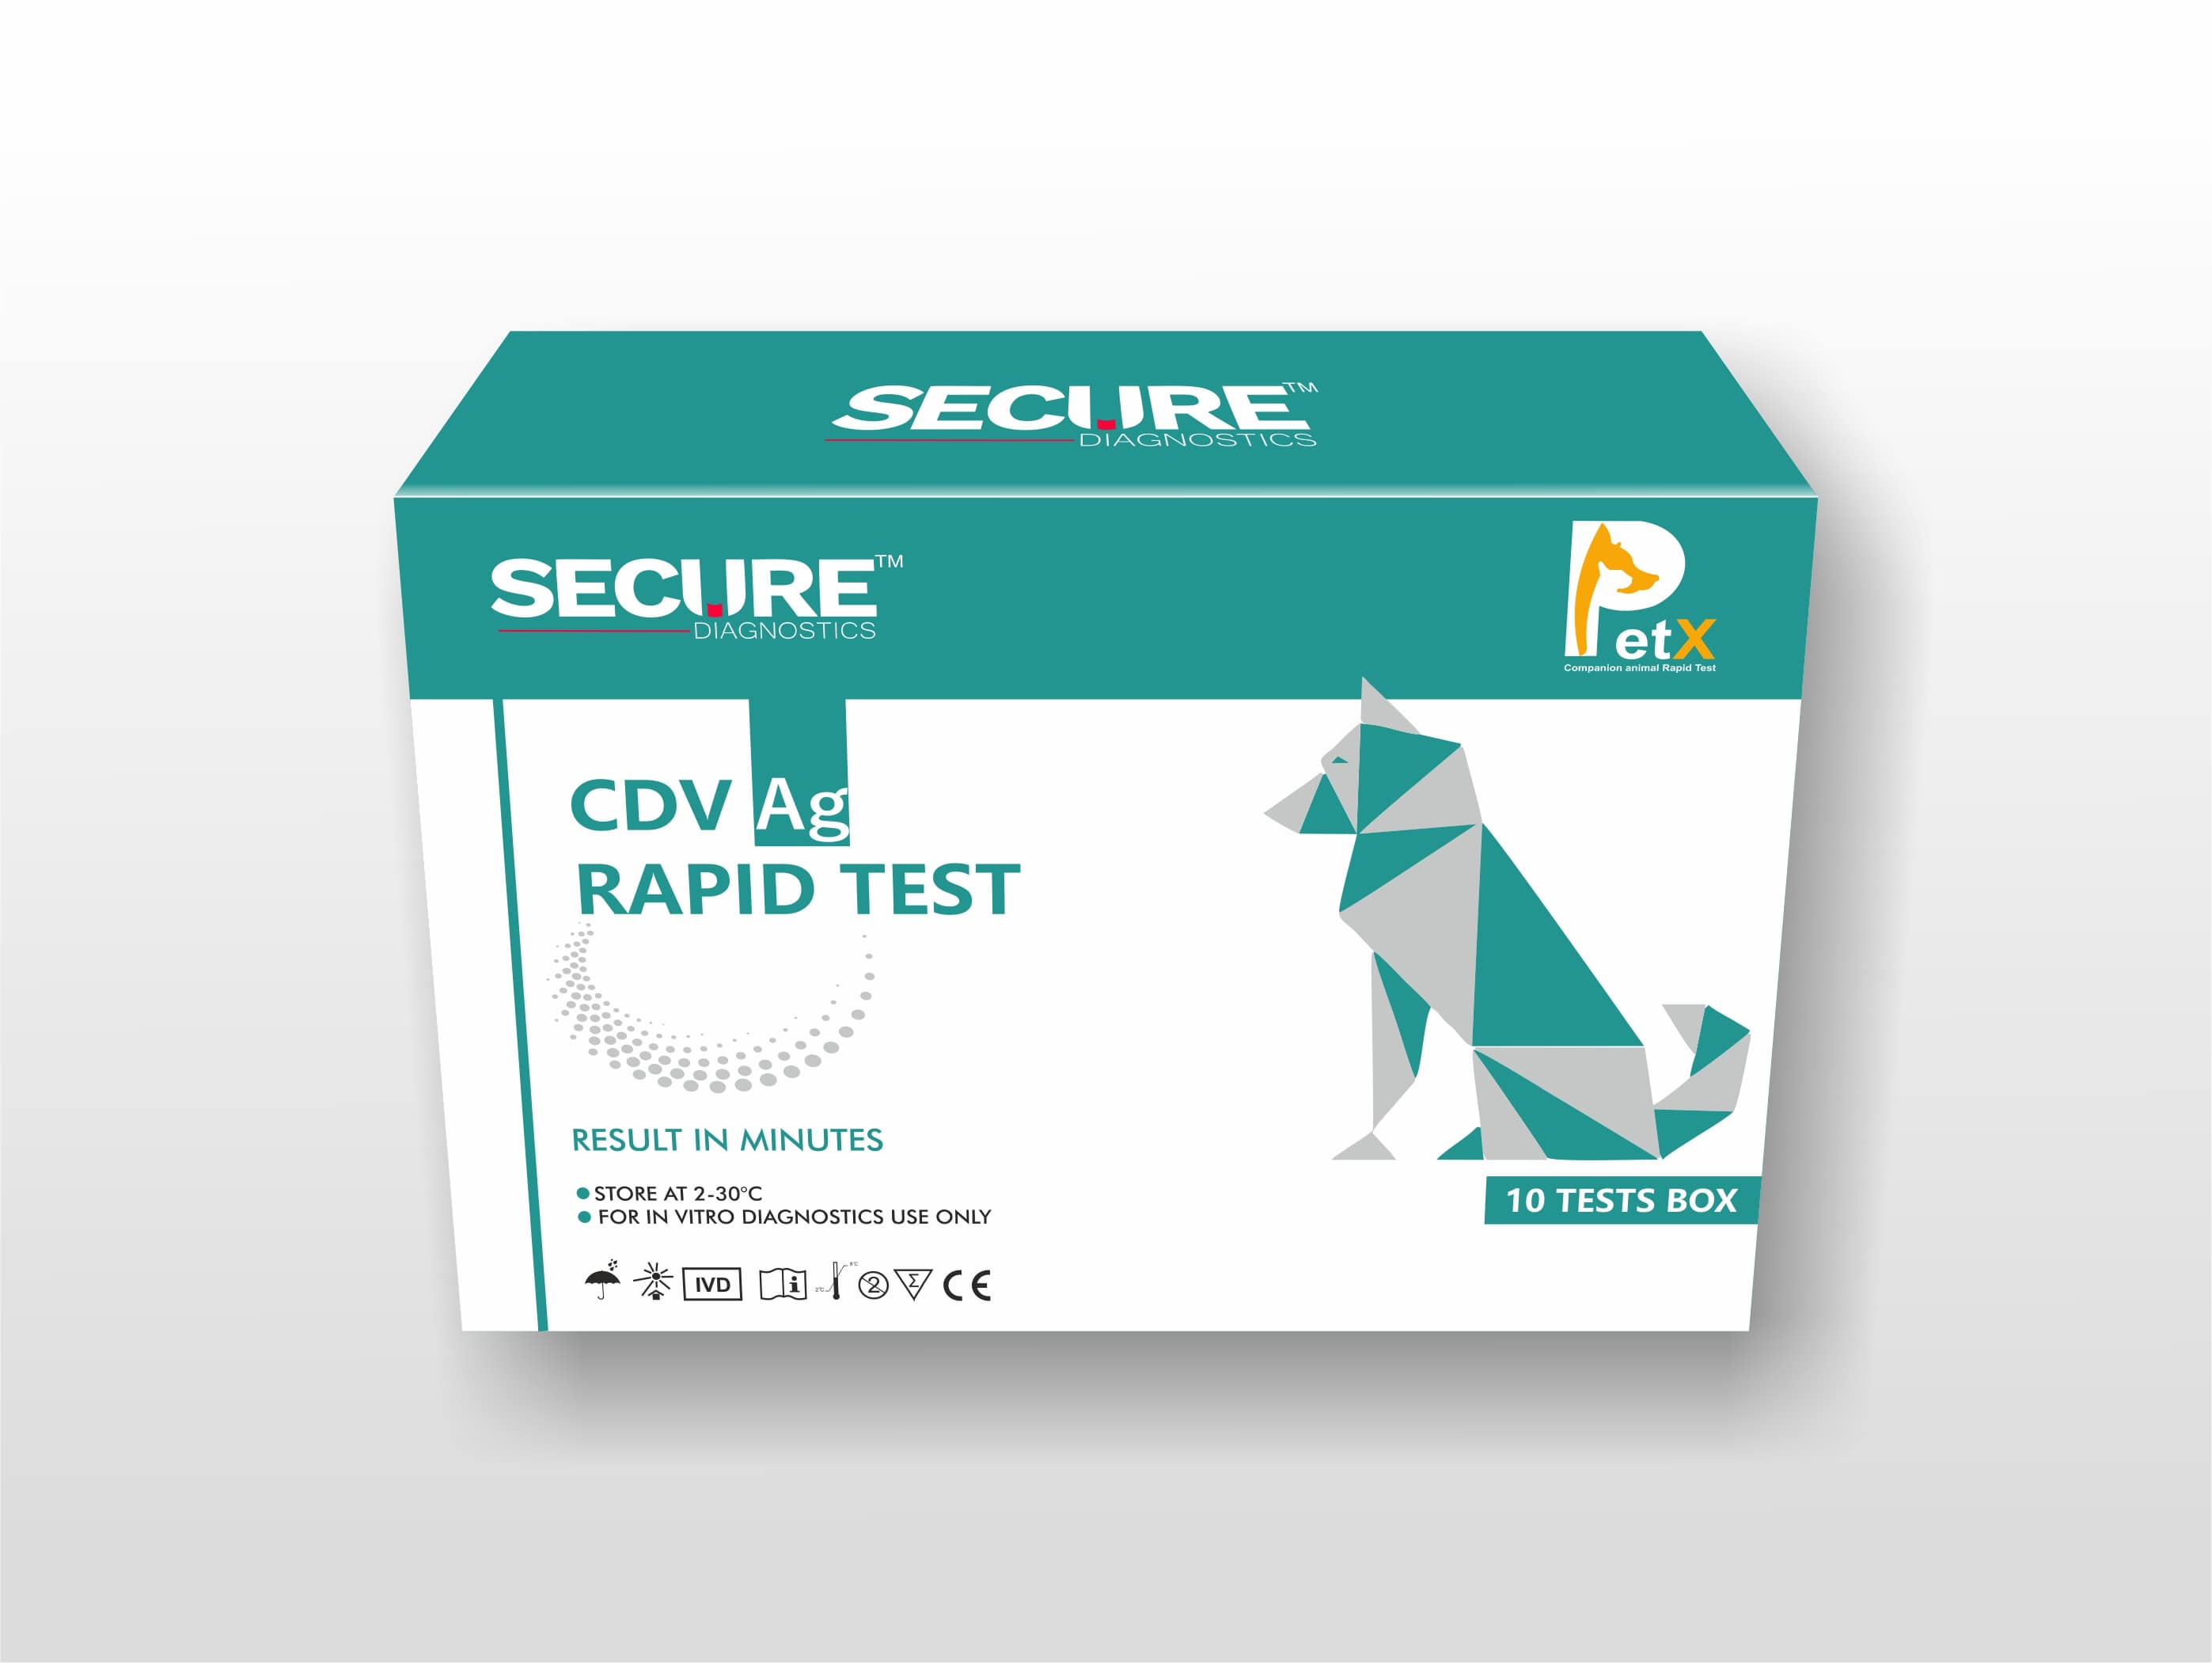 Canine Distemper virus Quantitative (CDV Ag) Antigen Test kit